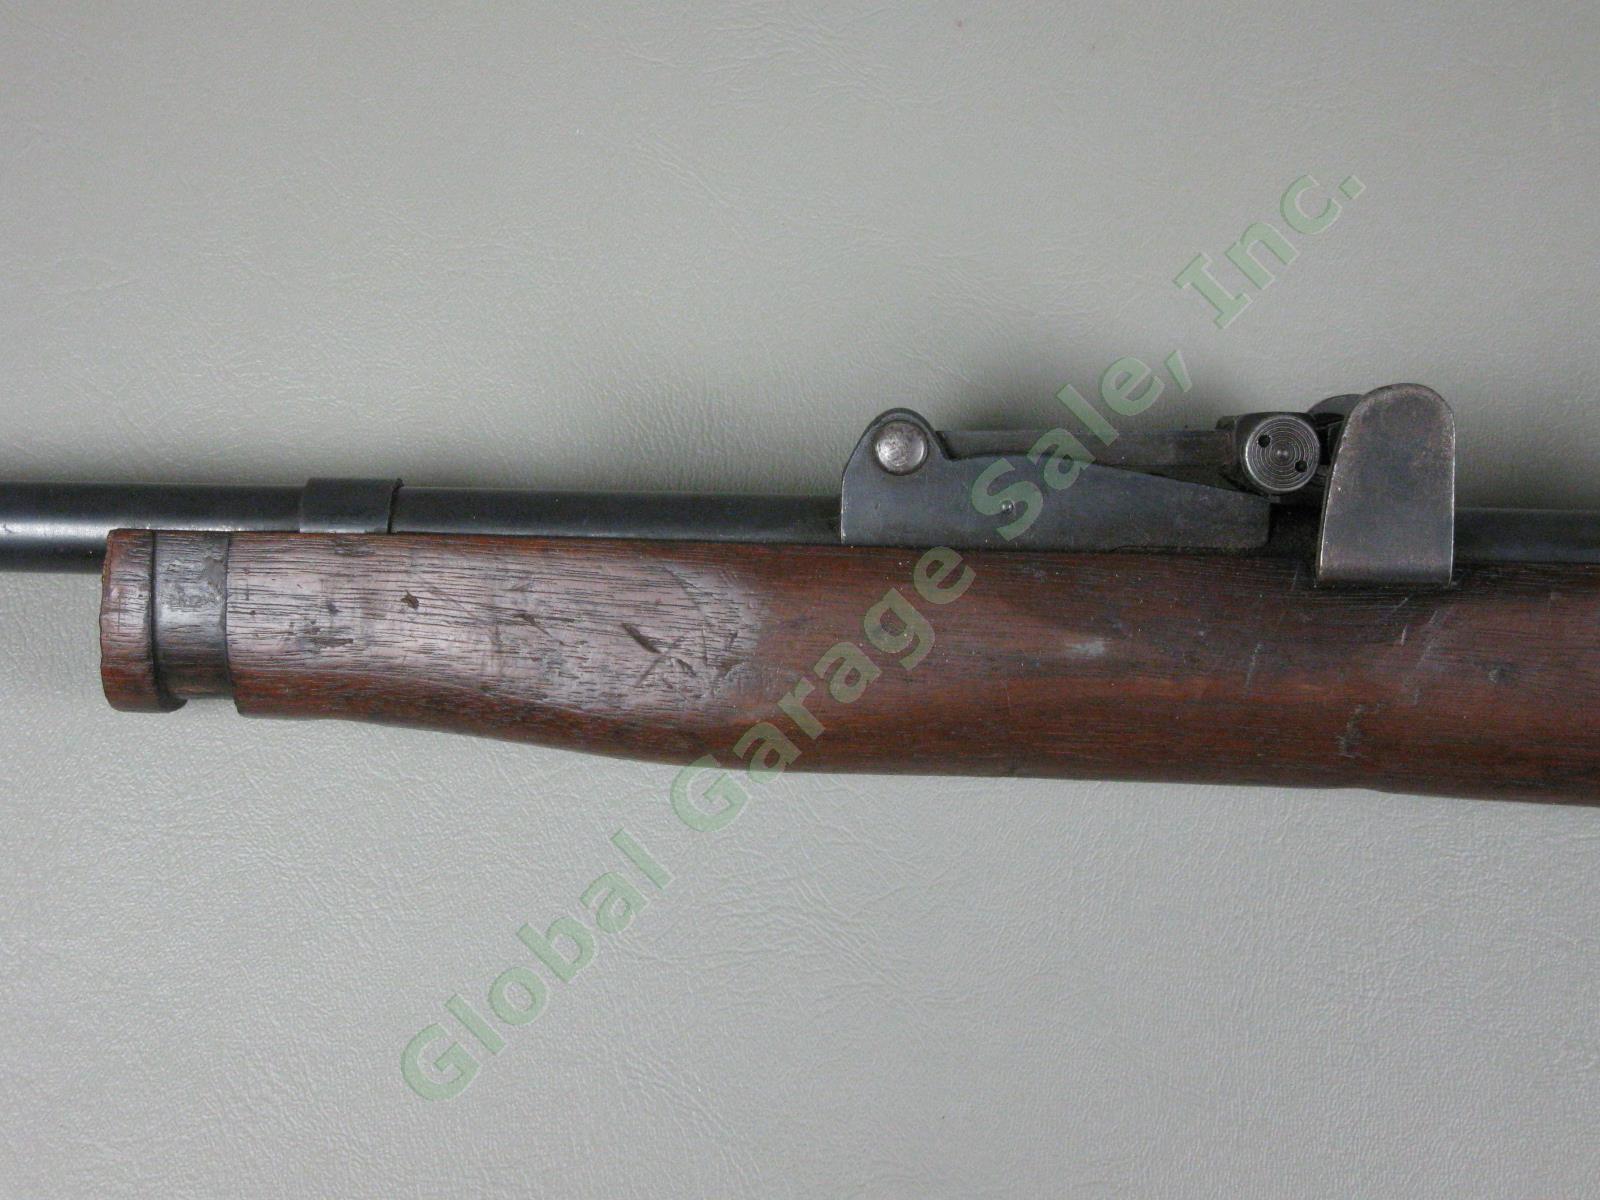 Rare WWI Lee-Enfield British Military Rifle GB 1917 SMLE SHT LE Mk III 8